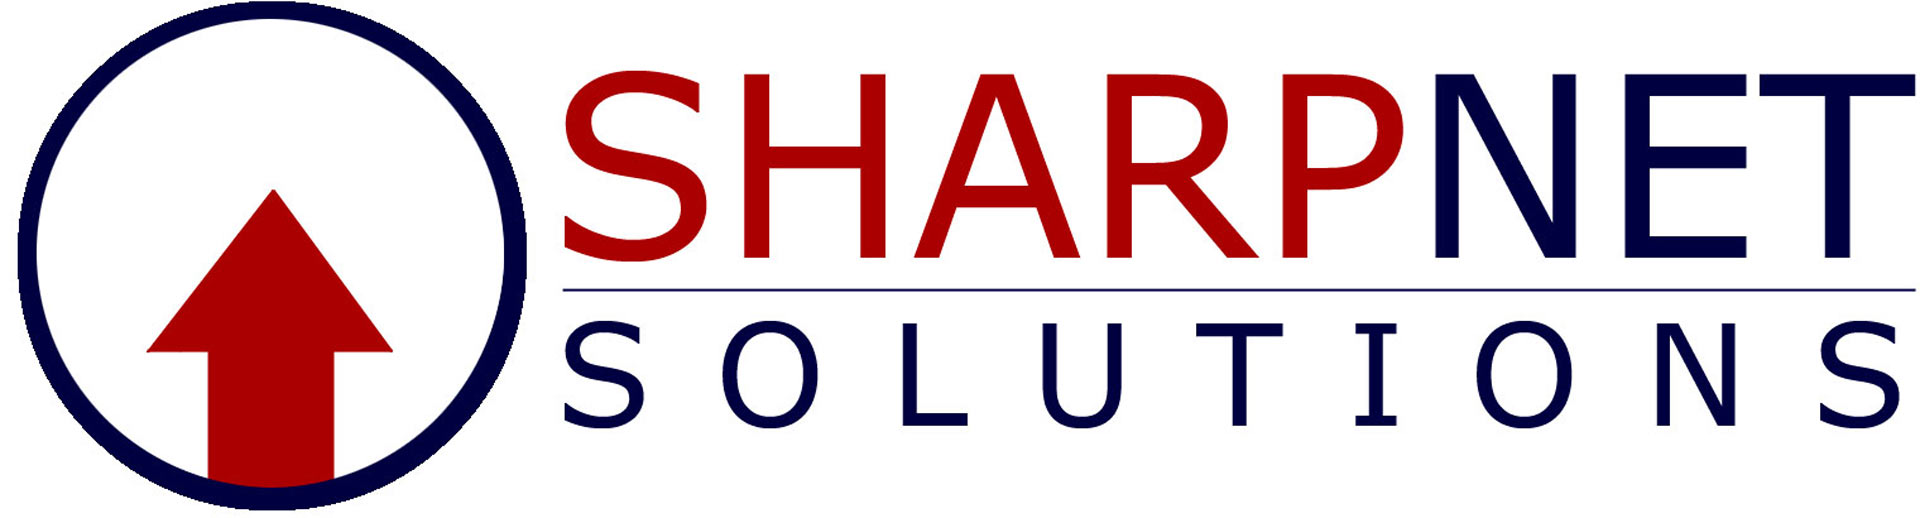 Best Online Marketing Business Logo: SharpNet